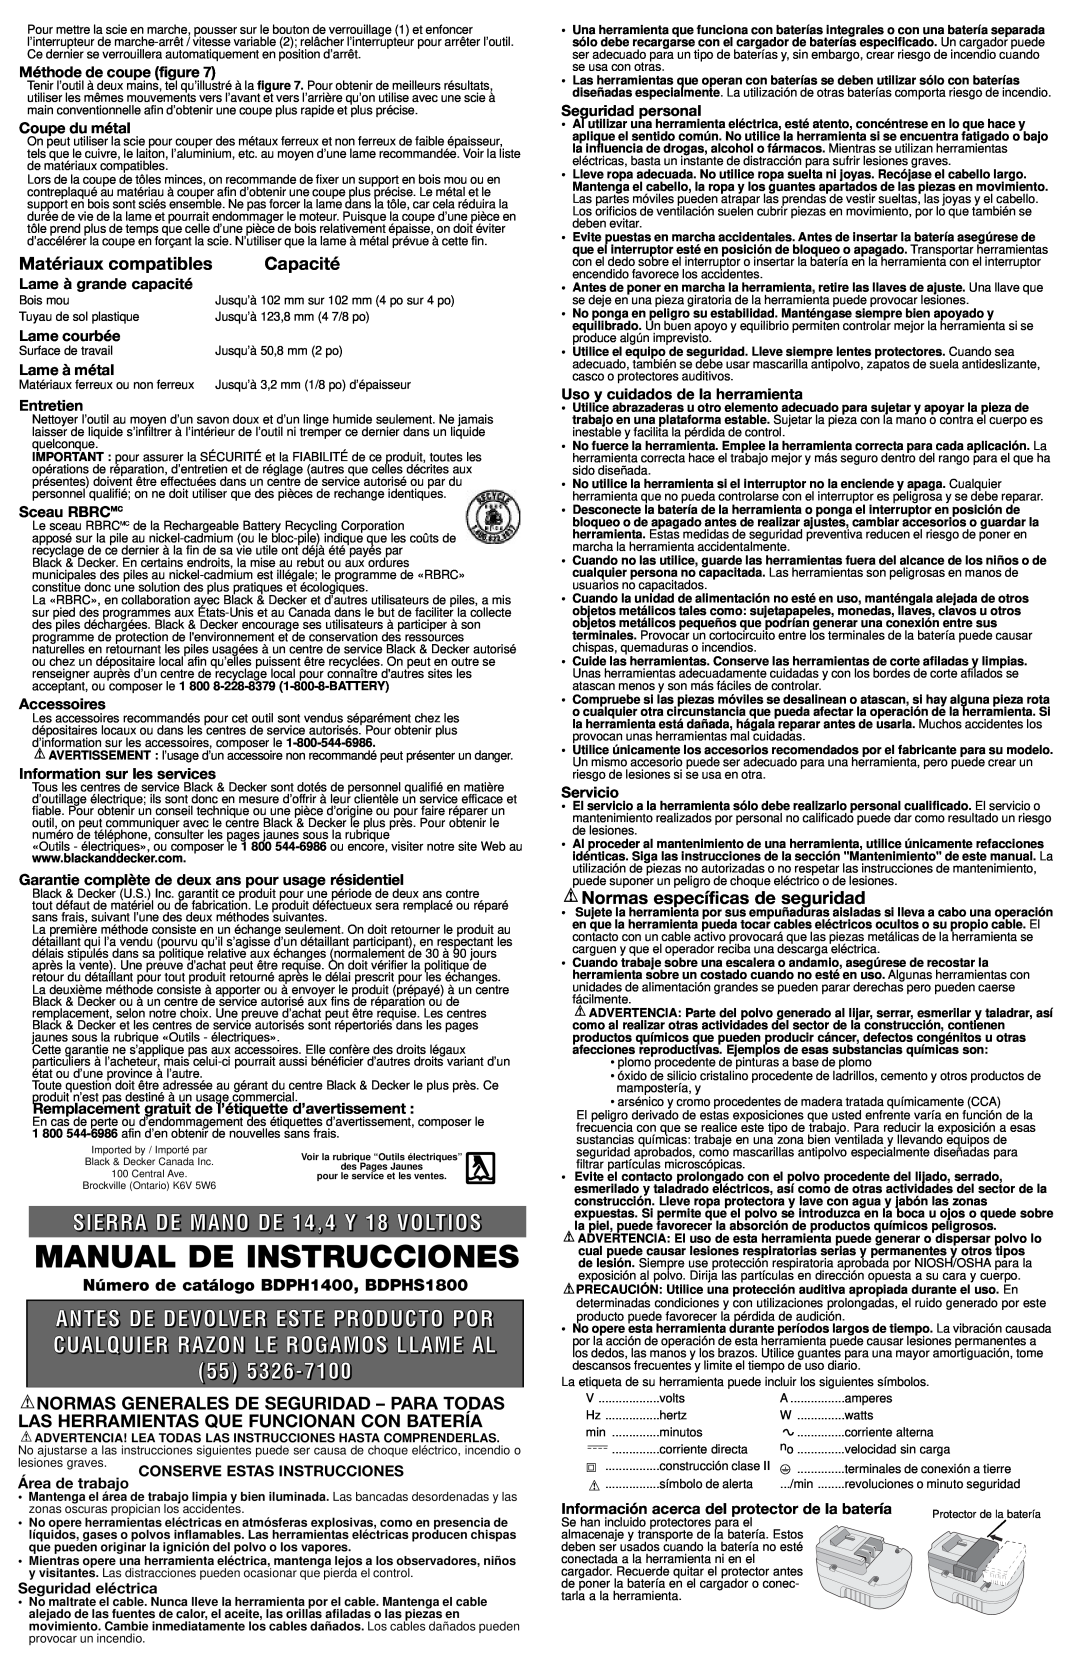 Black & Decker BDPHS1800 SIERRA DE MANO DE 14,4 Y 18 VOLTIOS, Matériaux compatibles, Capacité, Manual De Instrucciones 